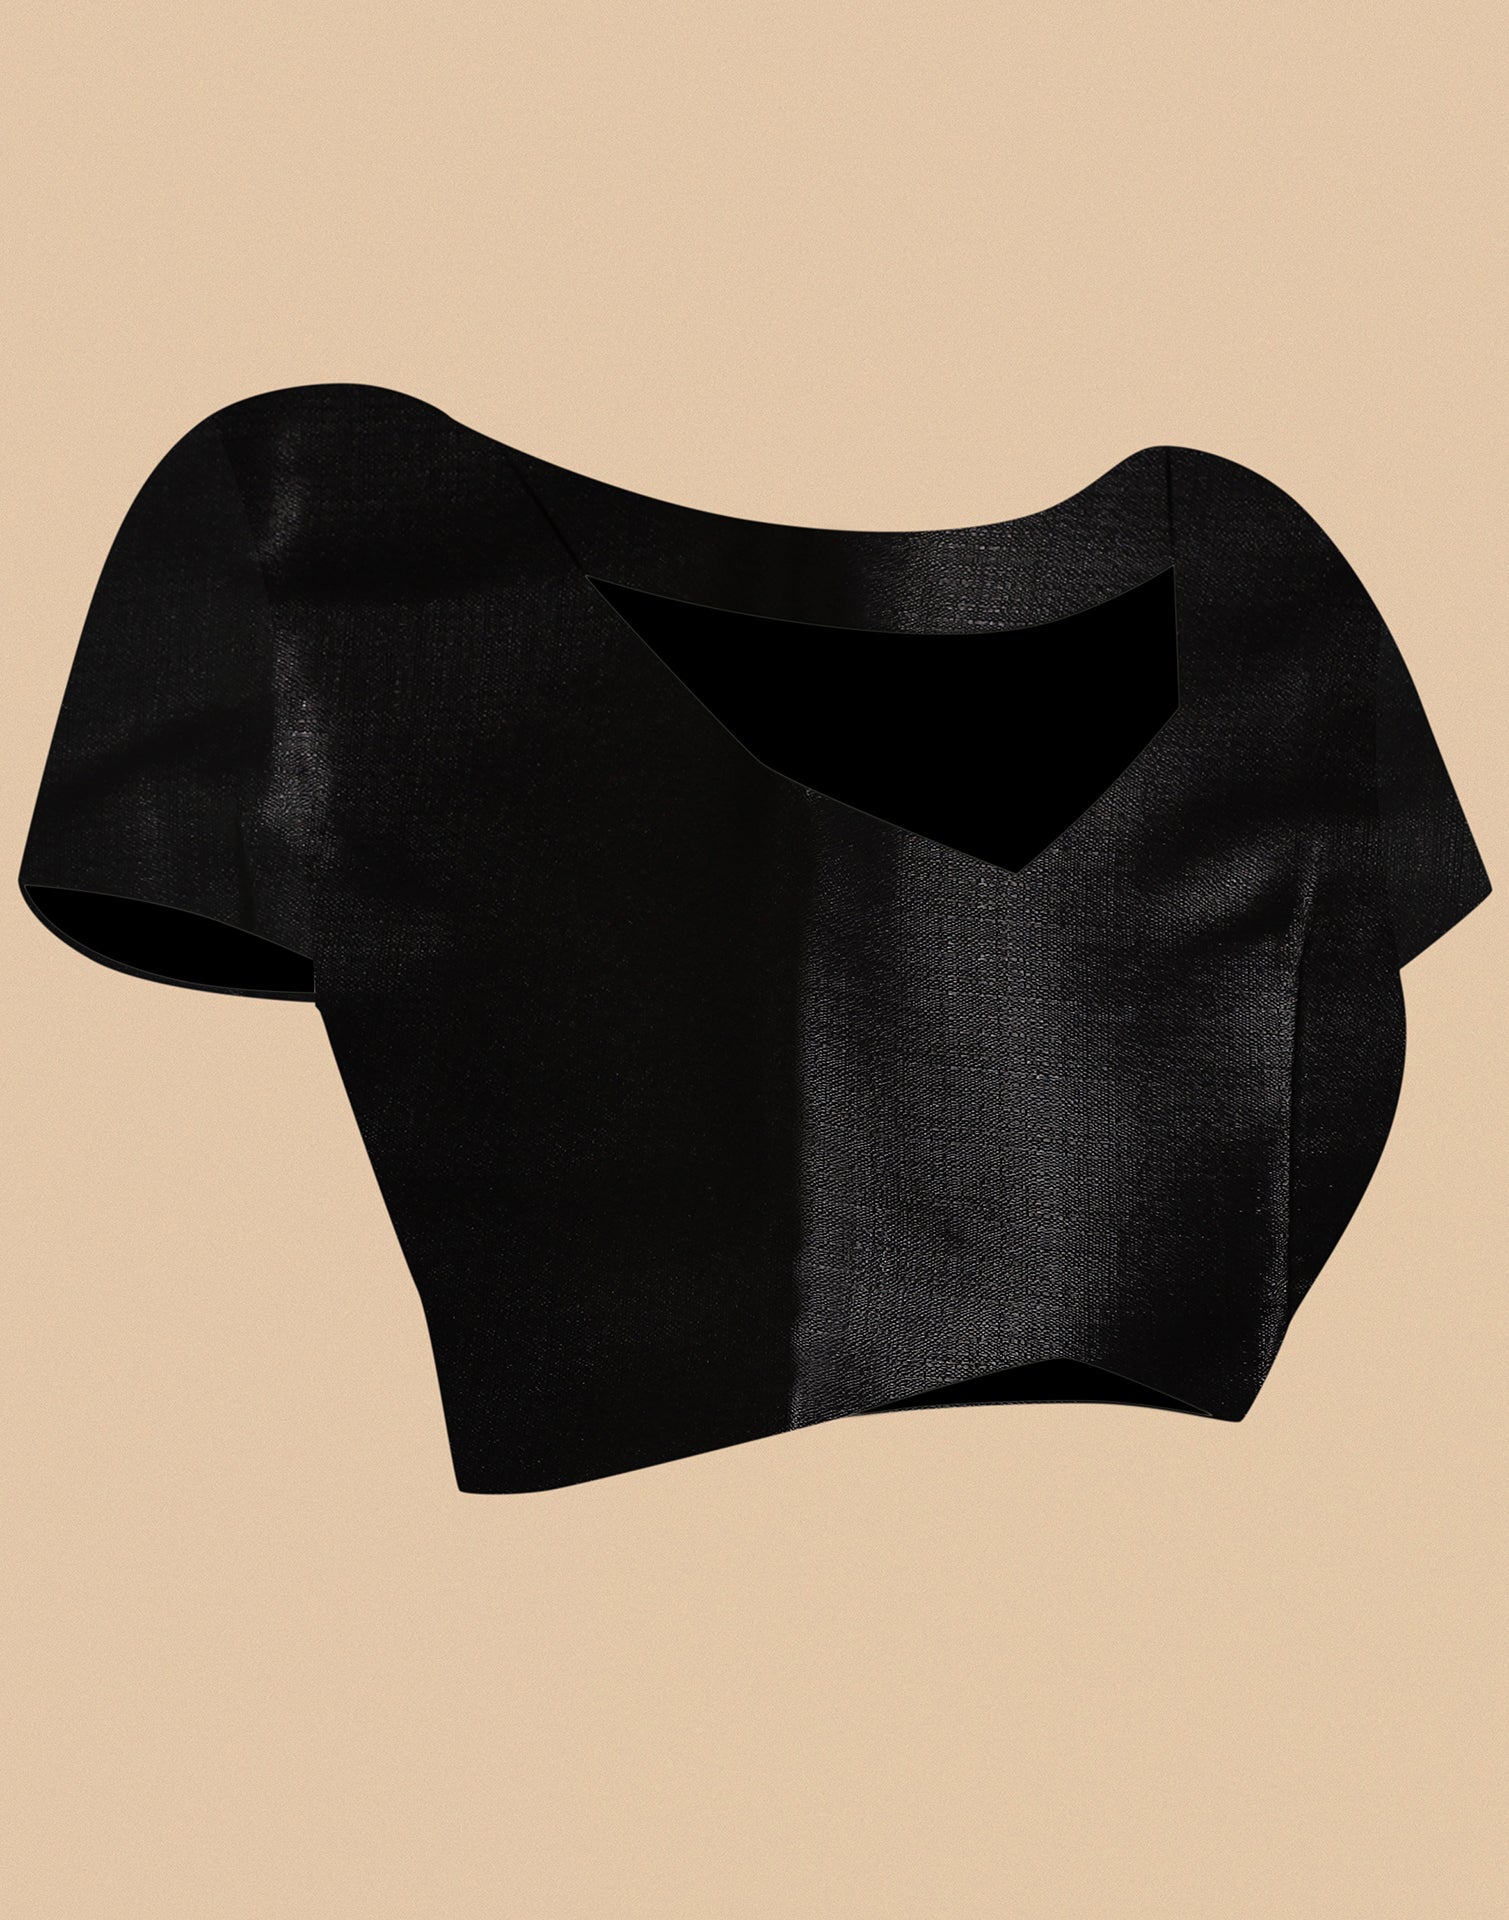 Black &amp; Beige Silk Printed Saree | Sudathi